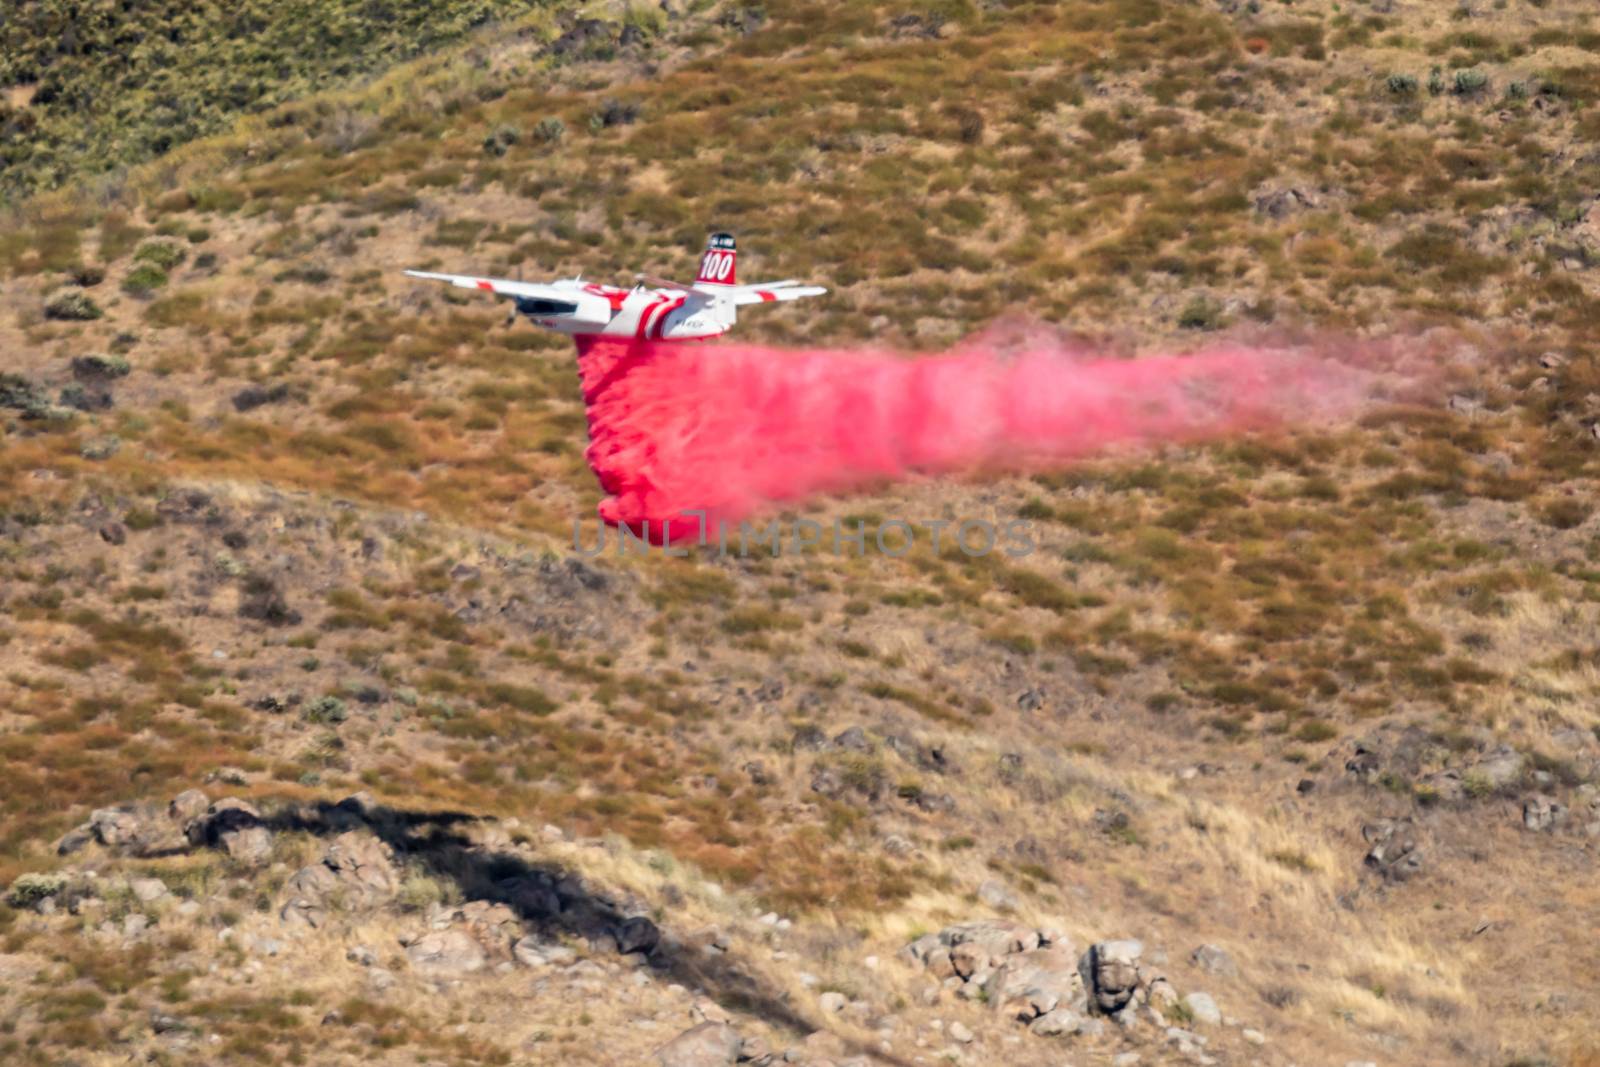 Winchester, CA USA - June 14, 2020: Cal Fire aircraft drops fire retardant on a dry hilltop wildfire near Winchester, California.